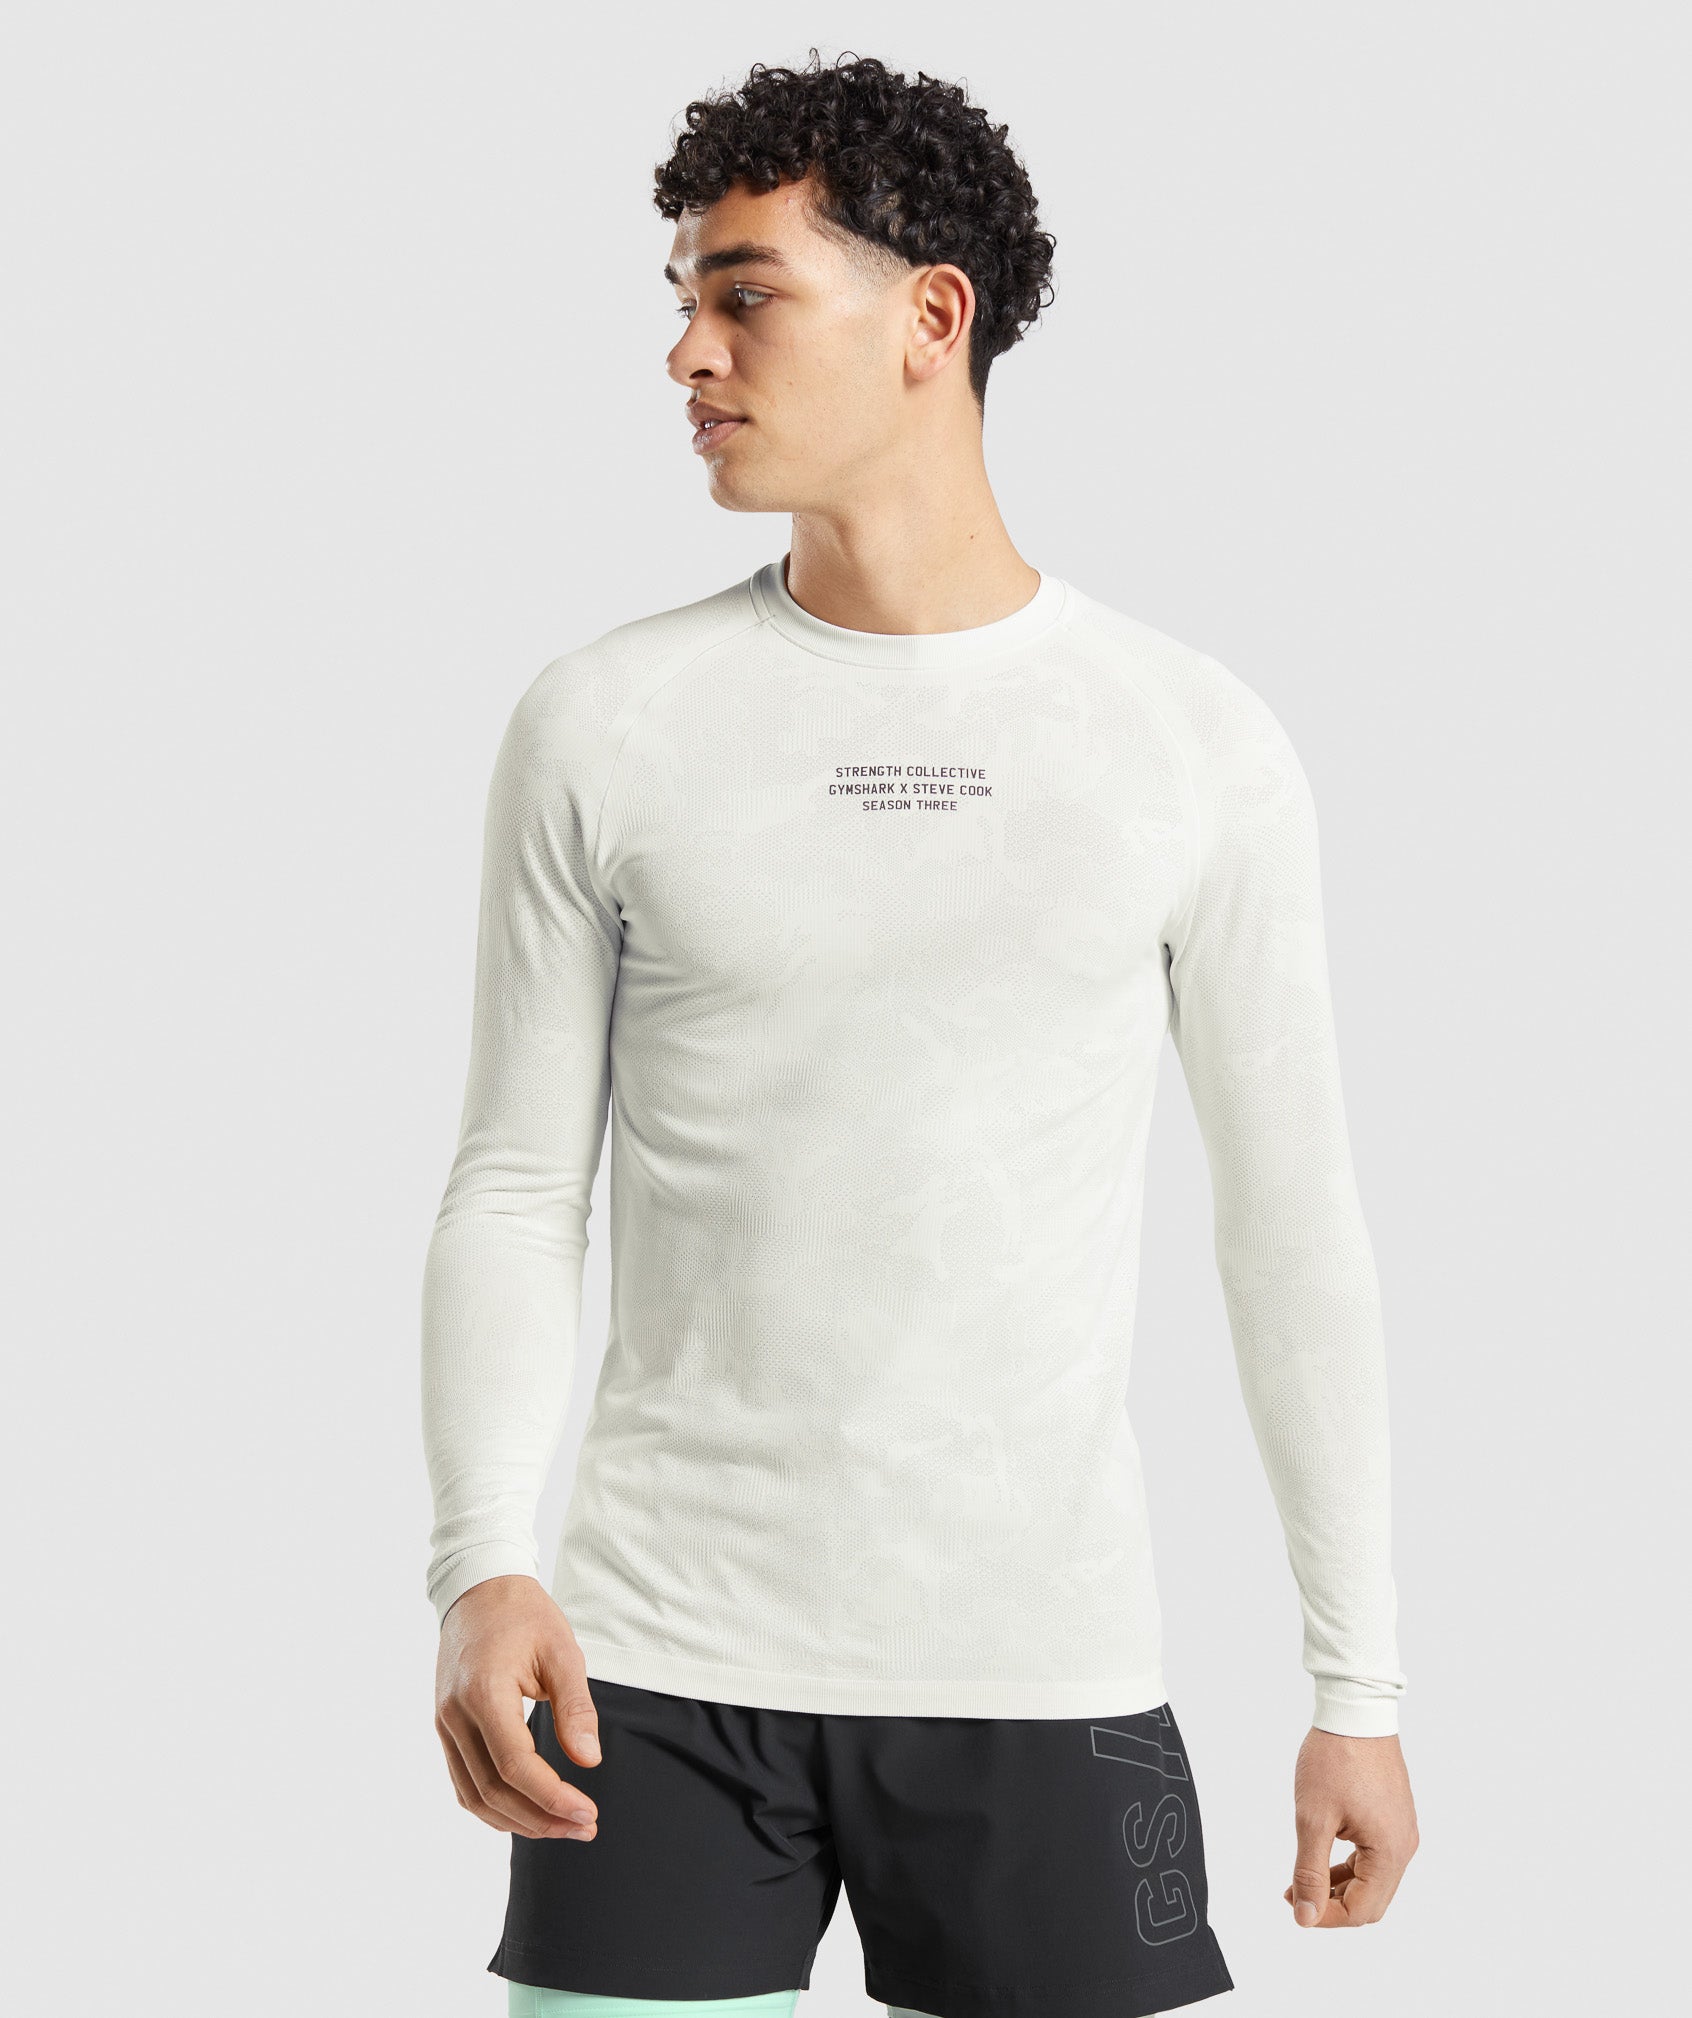 Gymshark//Steve Cook Long Sleeve Seamless T-Shirt in Off White/Light Grey - view 2